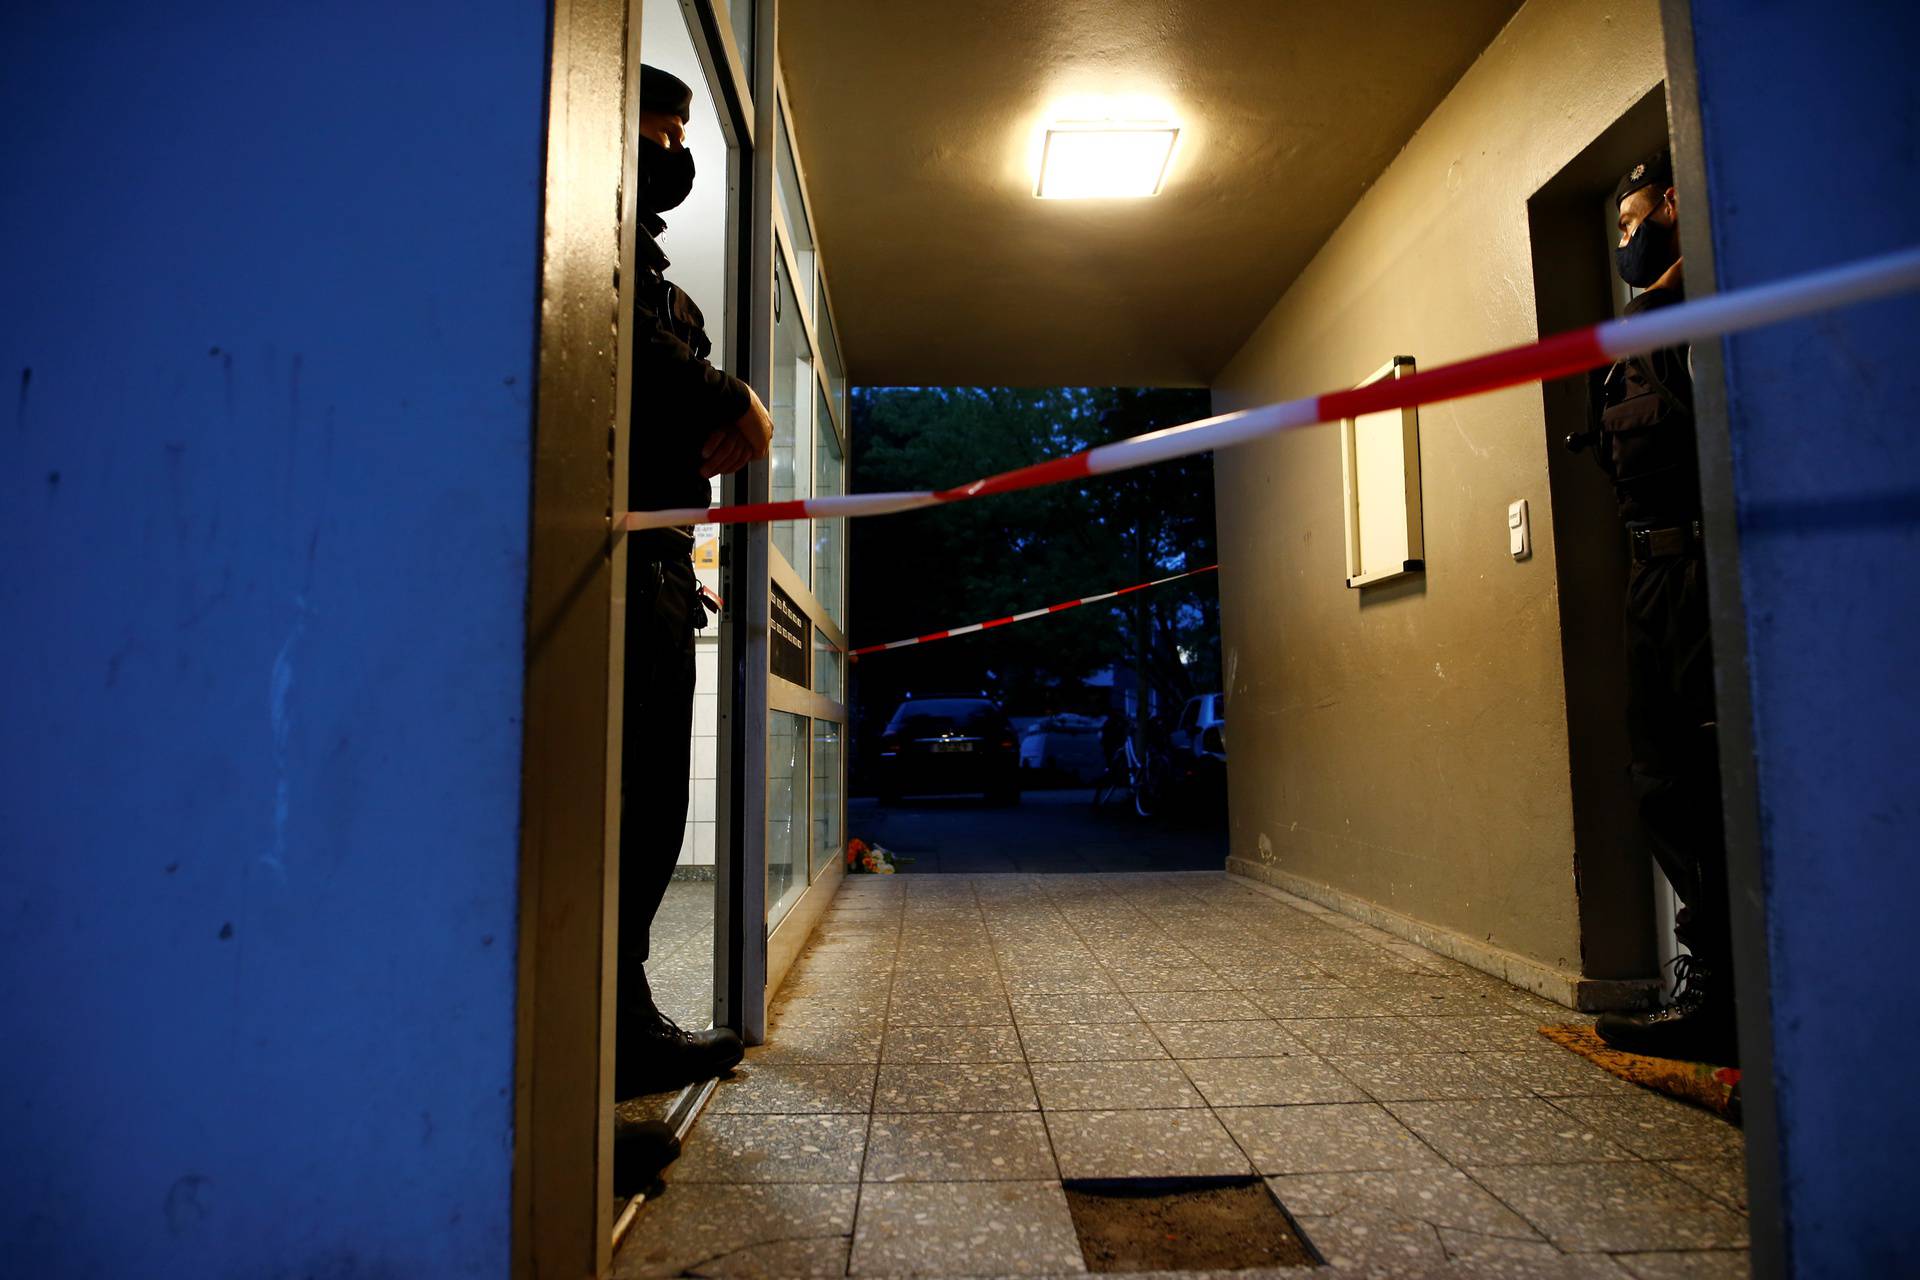 Police finds bodies of five children in Solingen